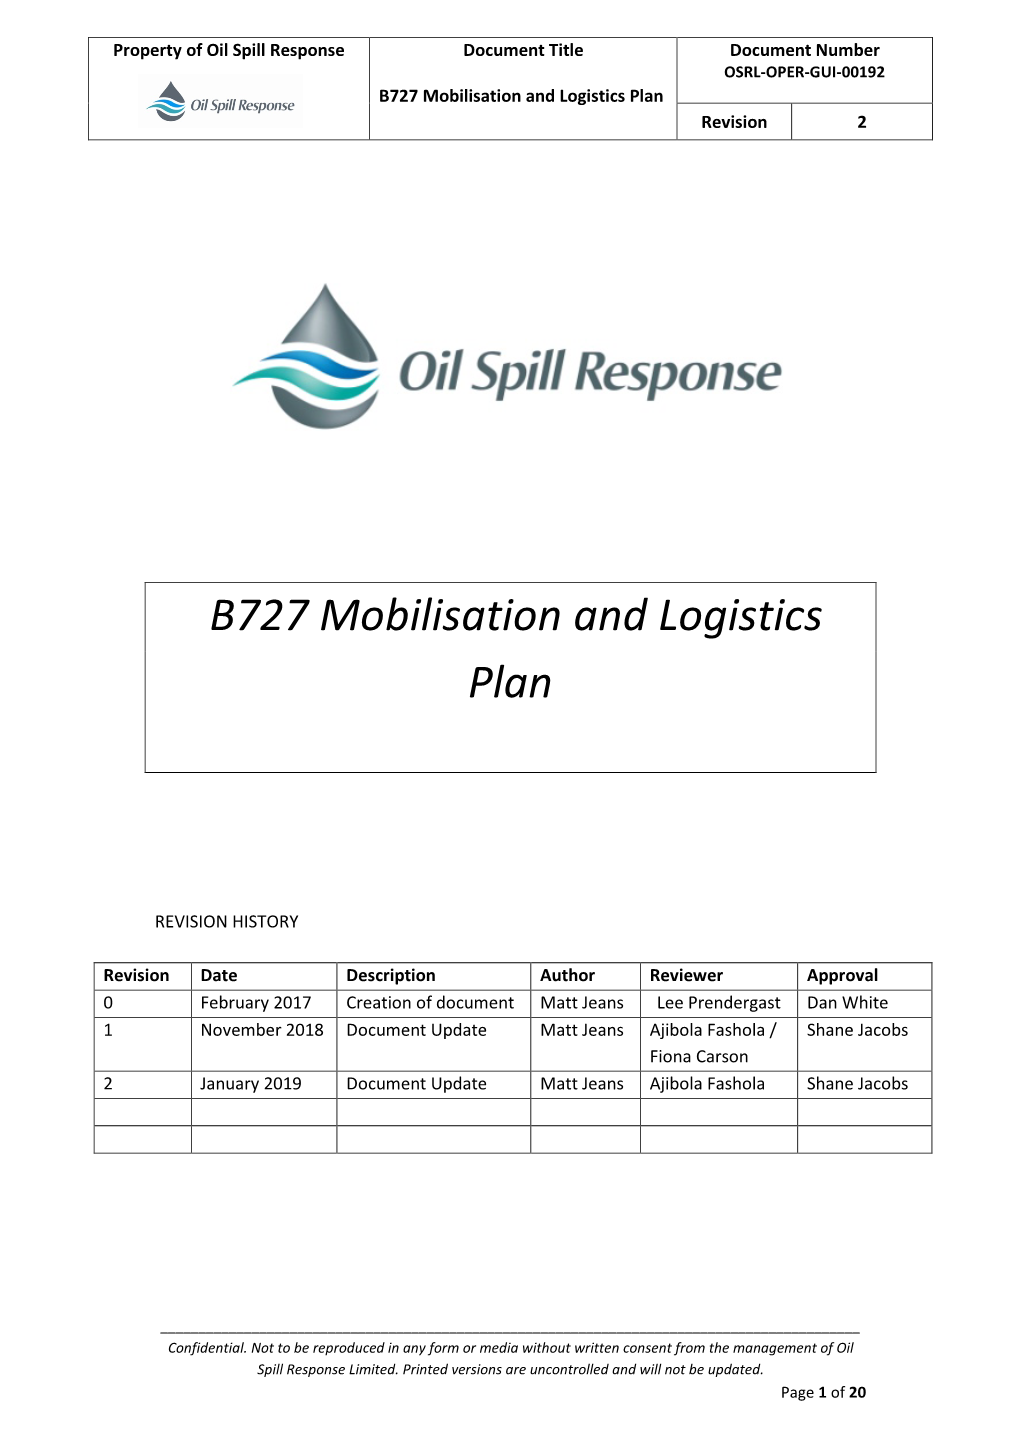 B727 Mobilisation and Logistics Plan Revision 2